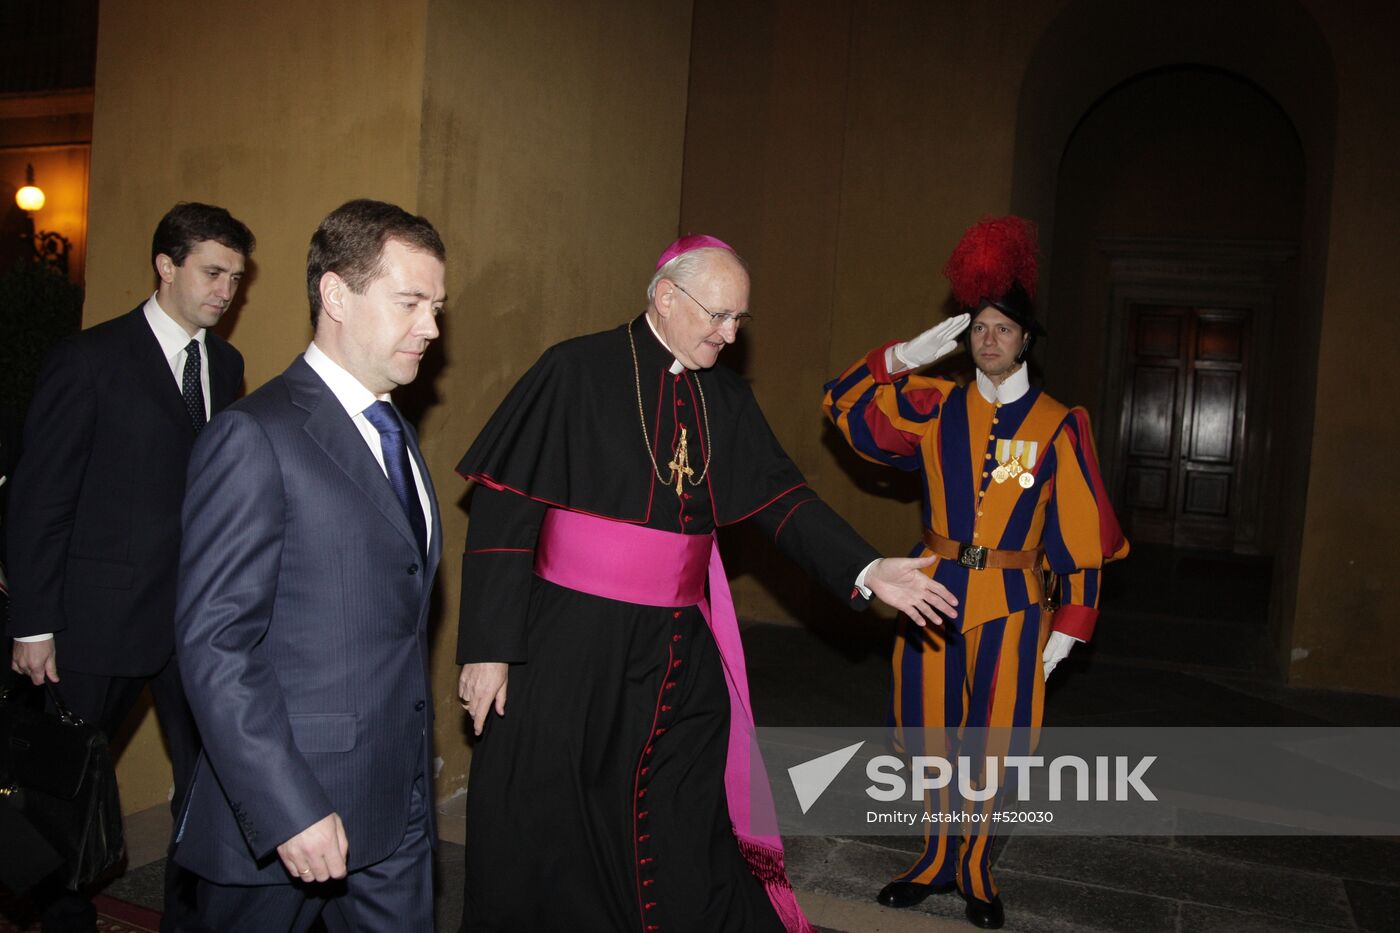 Dmitry Medvedev visits Vatican